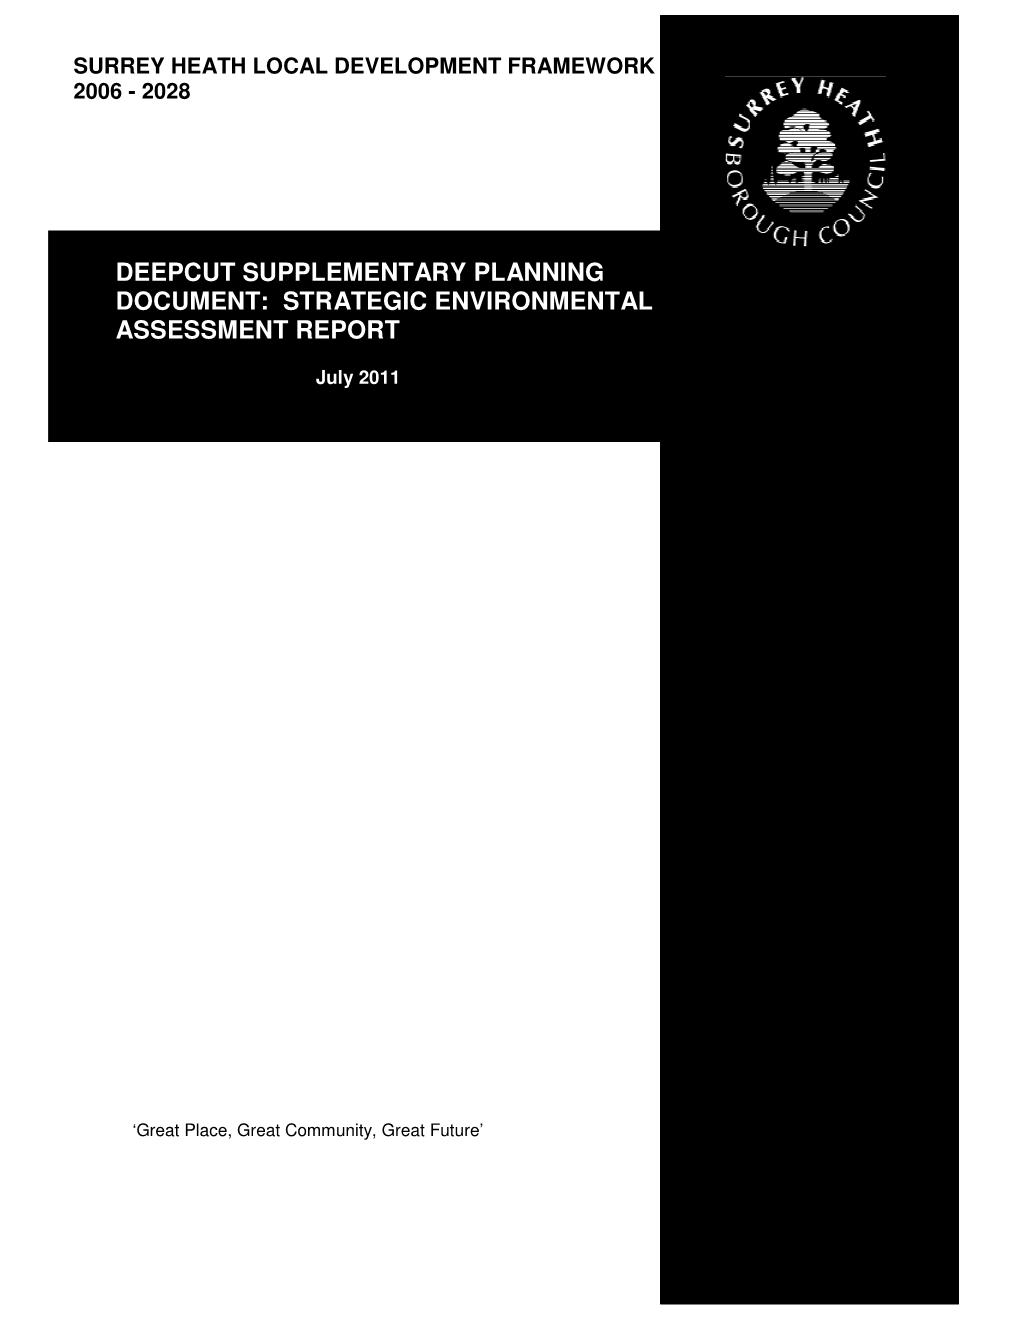 Deepcut Supplementary Planning Document: Strategic Environmental